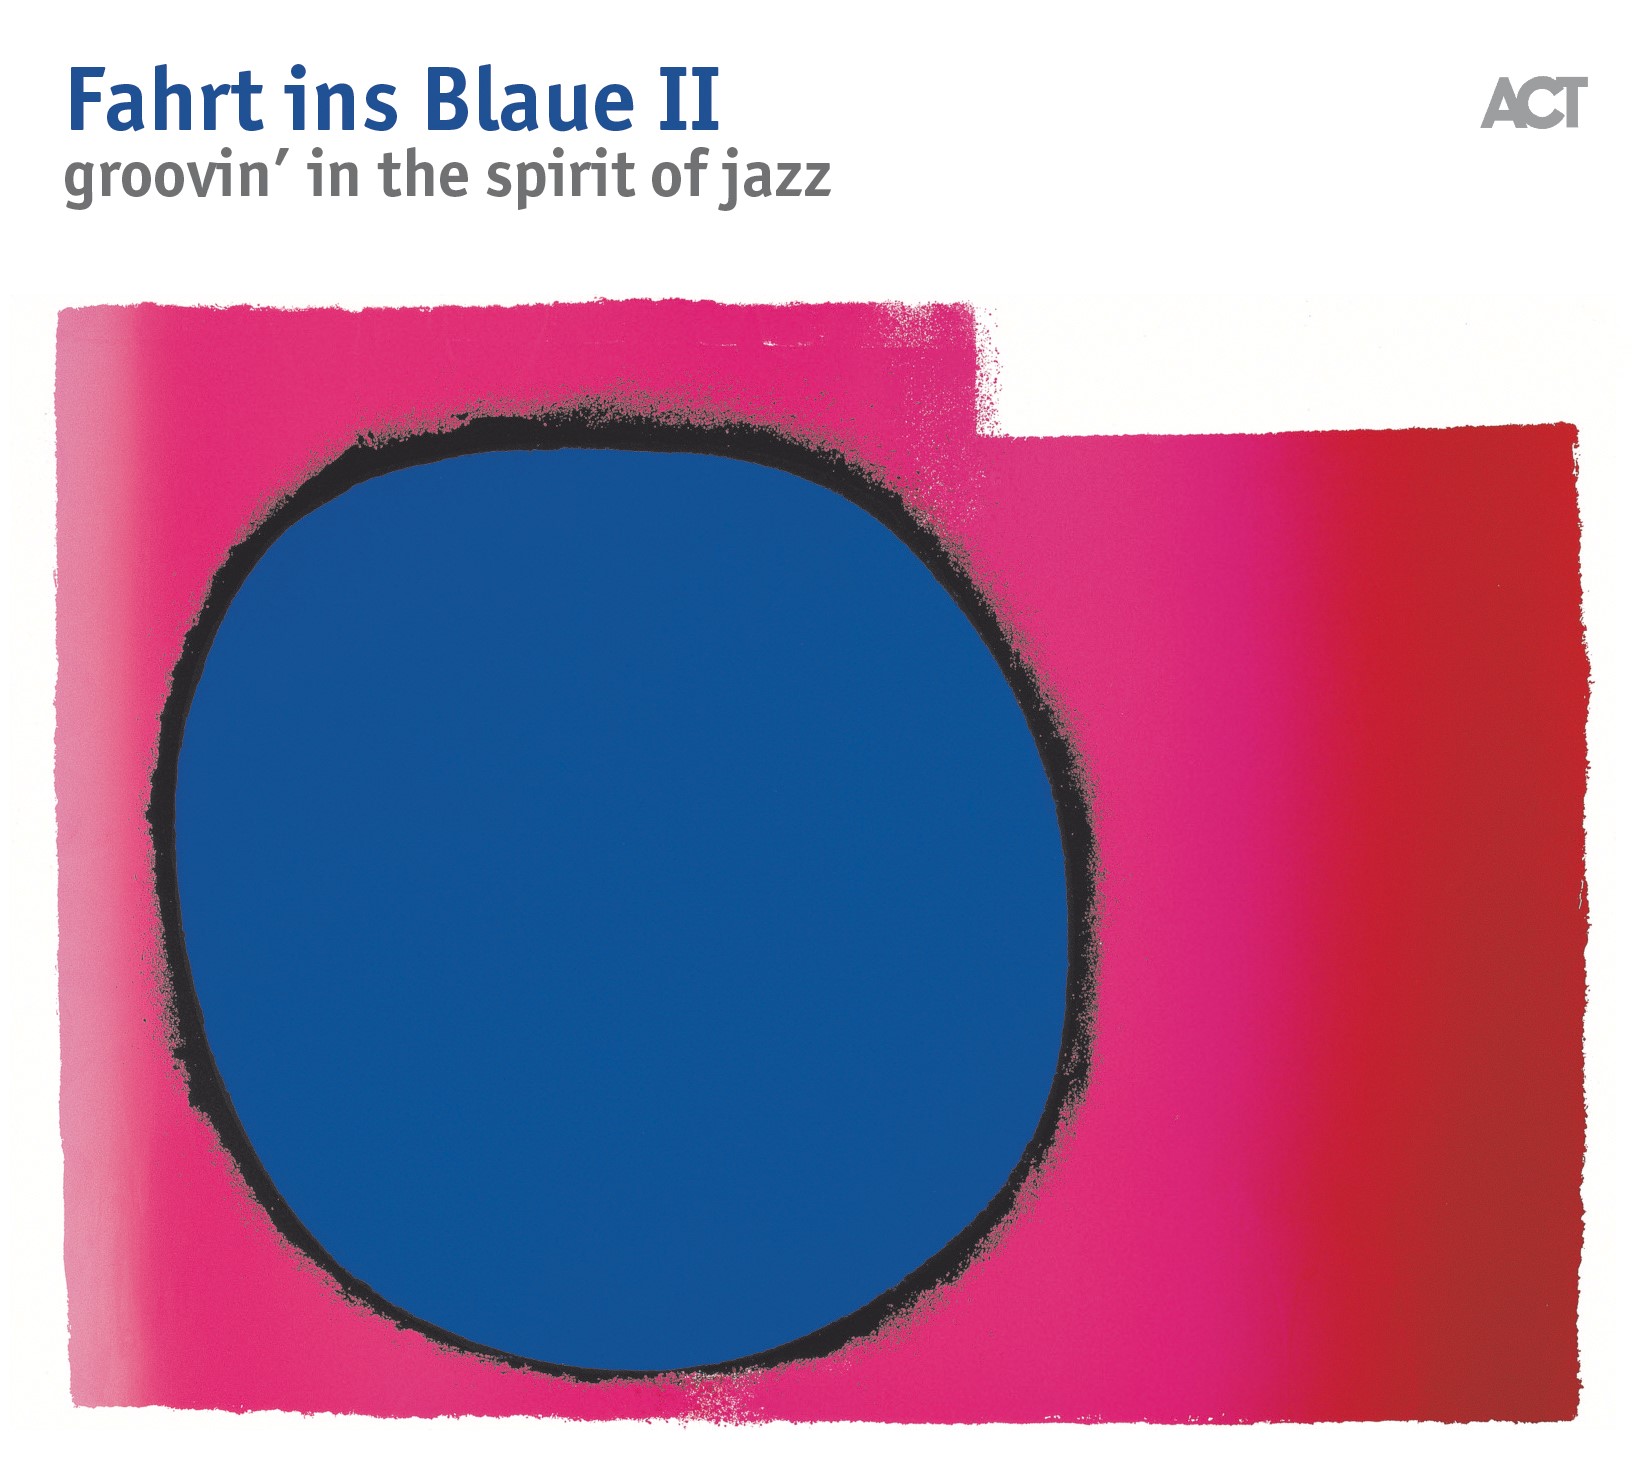 Fahrt ins Blaue II - groovin' in the spirit of jazz